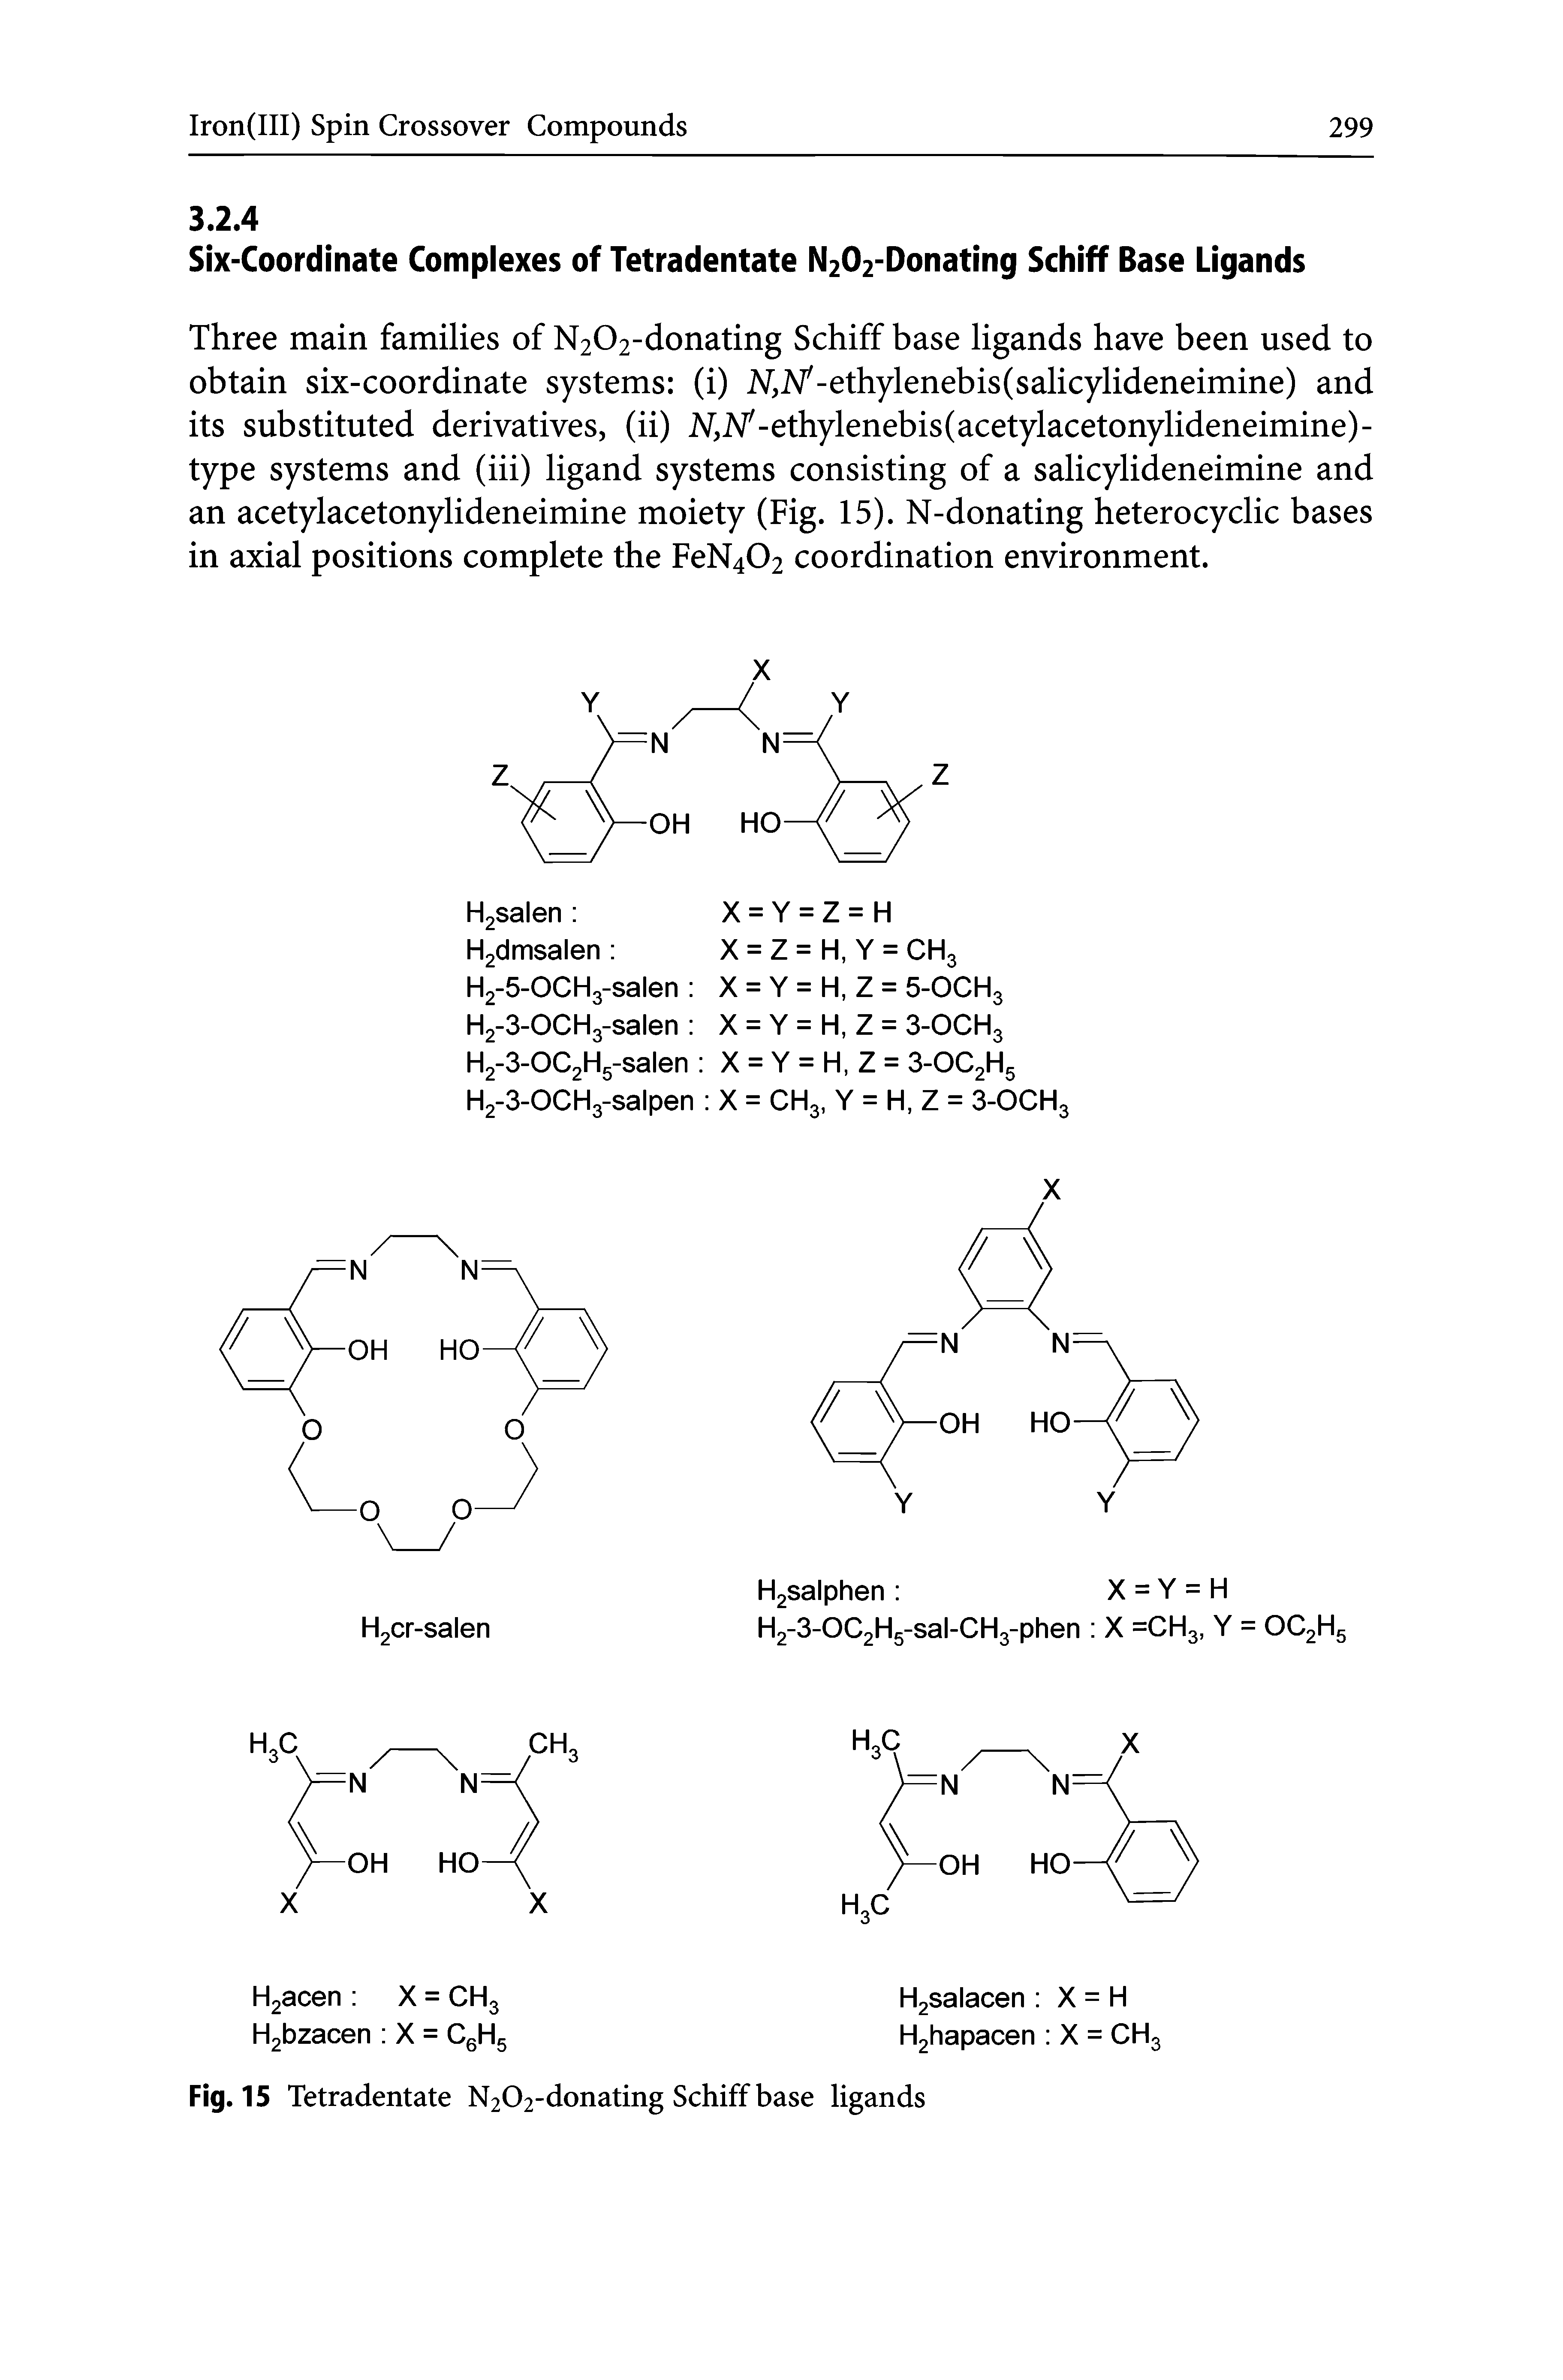 Fig. 15 Tetradentate N202-donating Schiff base ligands...